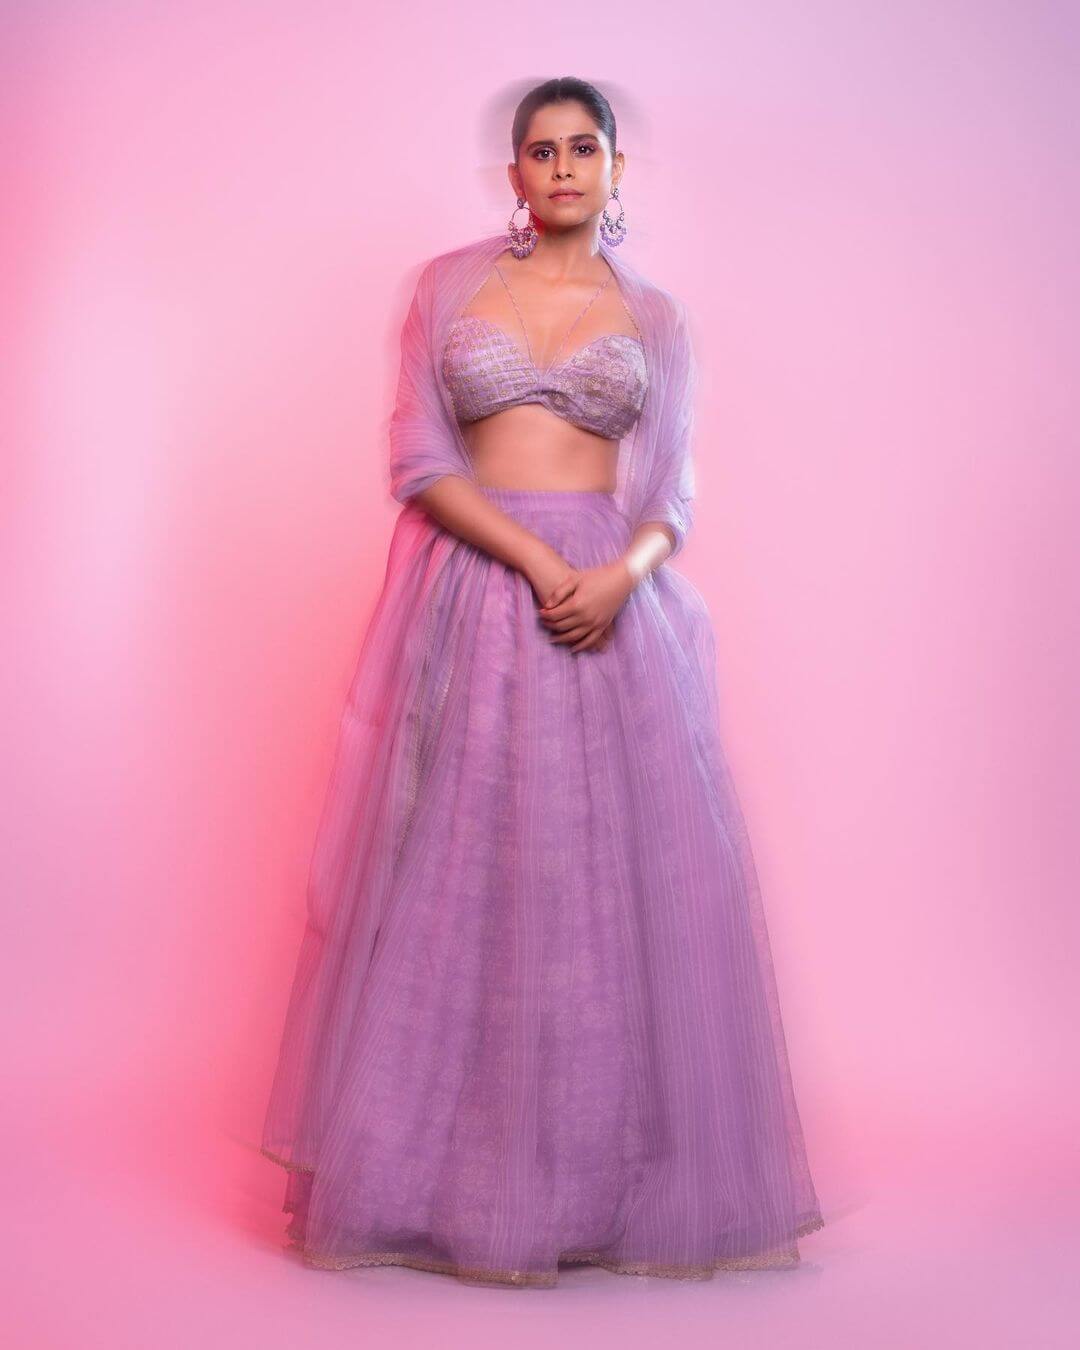  Sai Tamhankar Stylish Outfits & Looks Inspo : Sai Tamhankar Look Ravishing In Light Purple Lehenga Outfit